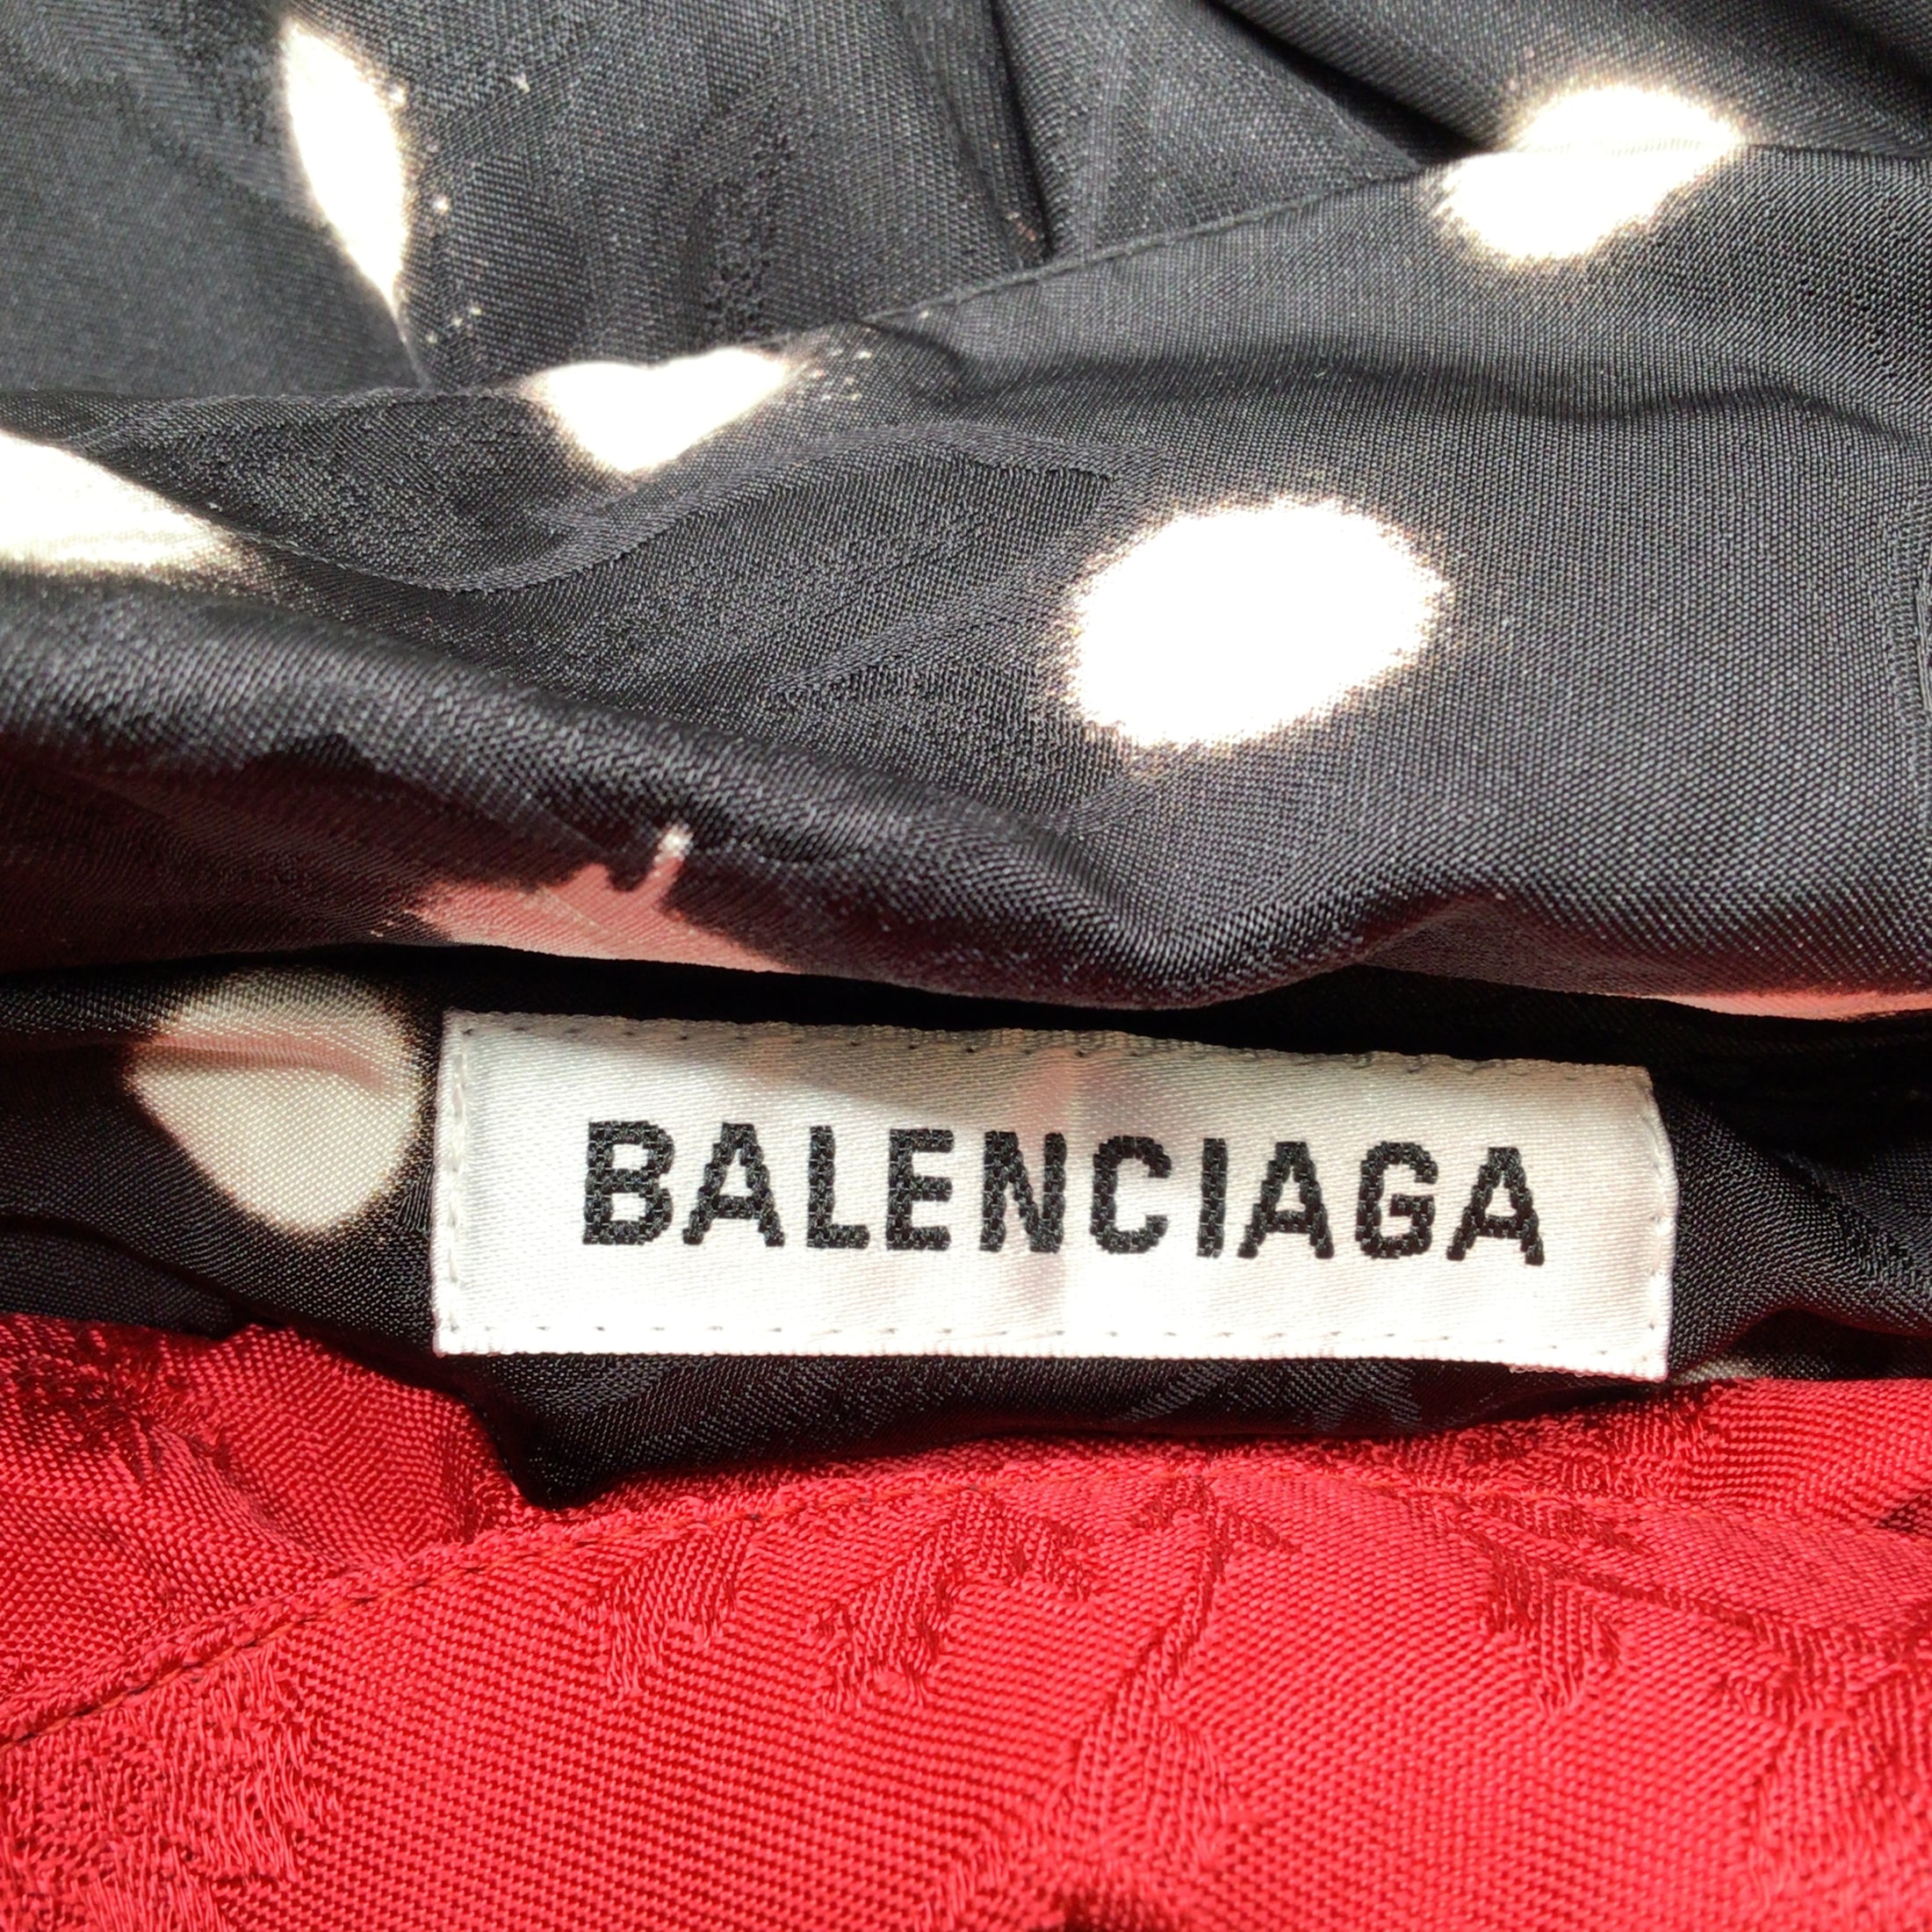 Balenciaga Black / White / Red Reversible Belted Polka Dot Dress